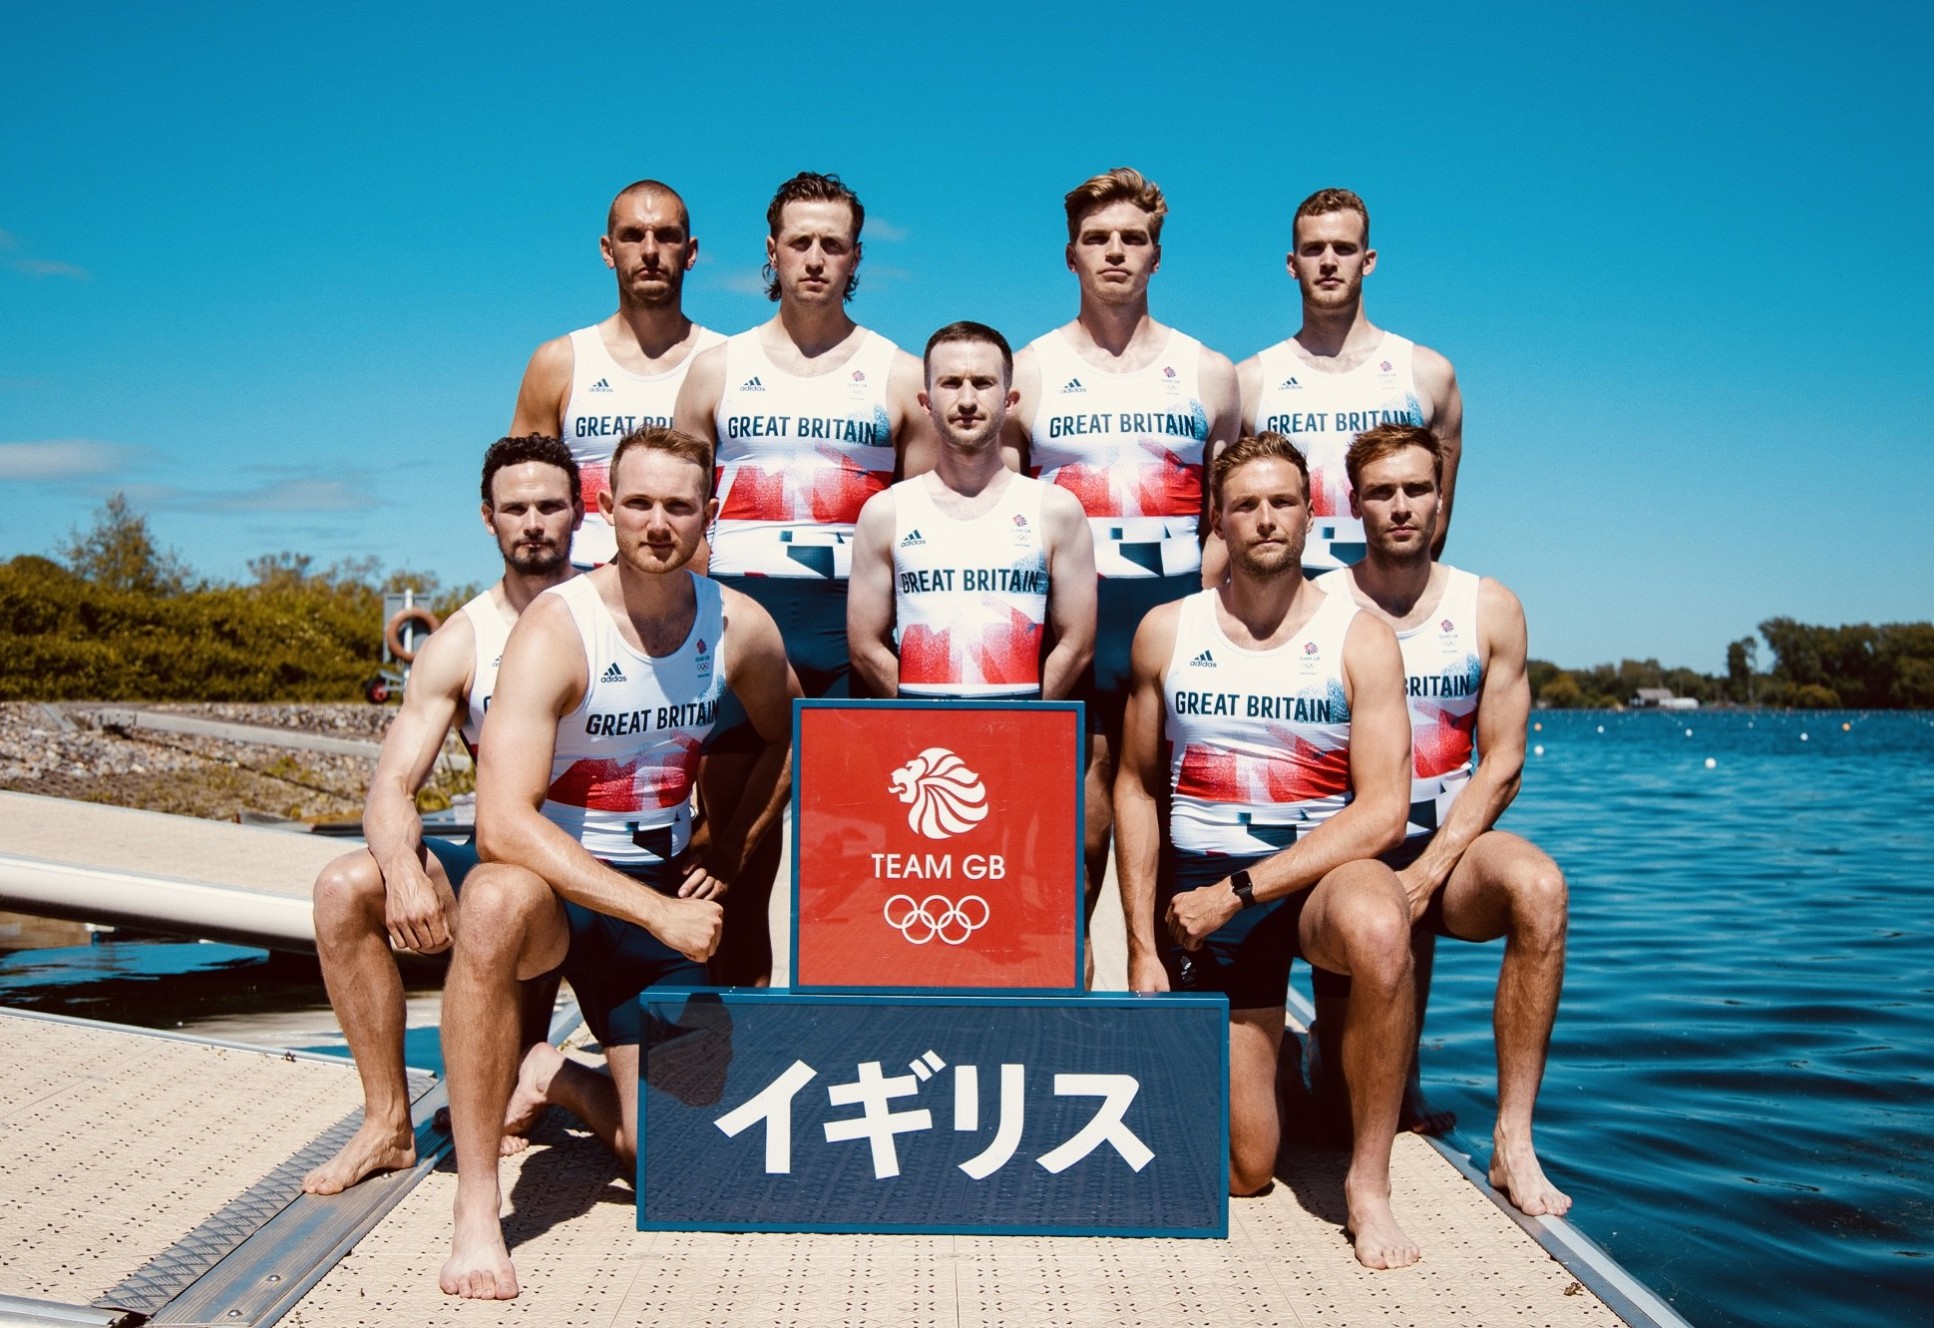 Team GB's men's eight Olympic rowing team